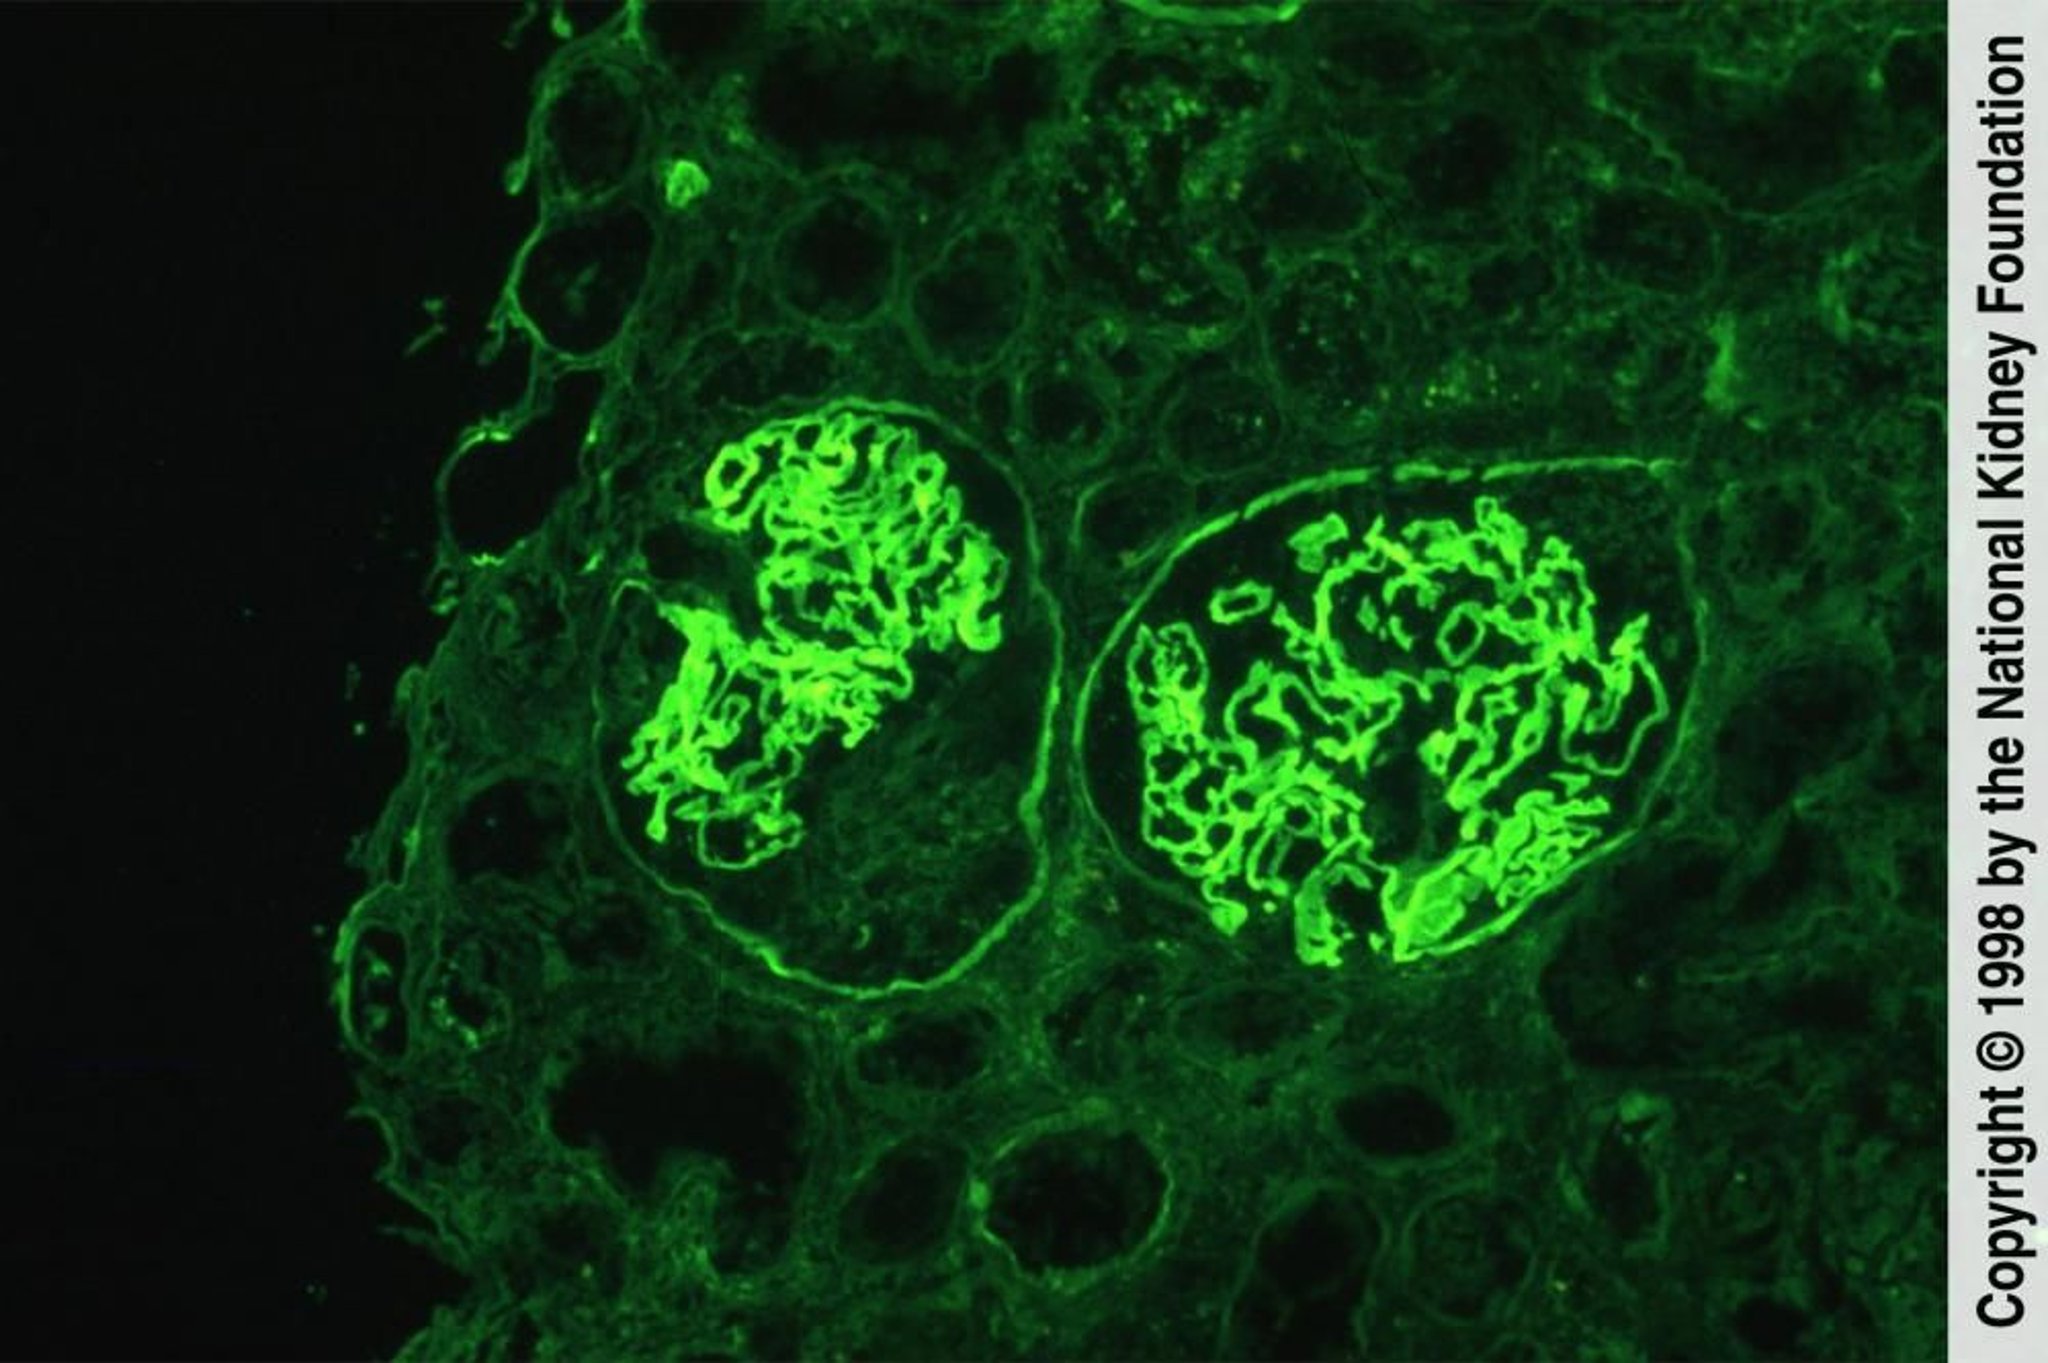 Doença do anticorpo antimembrana basal antiglomerular